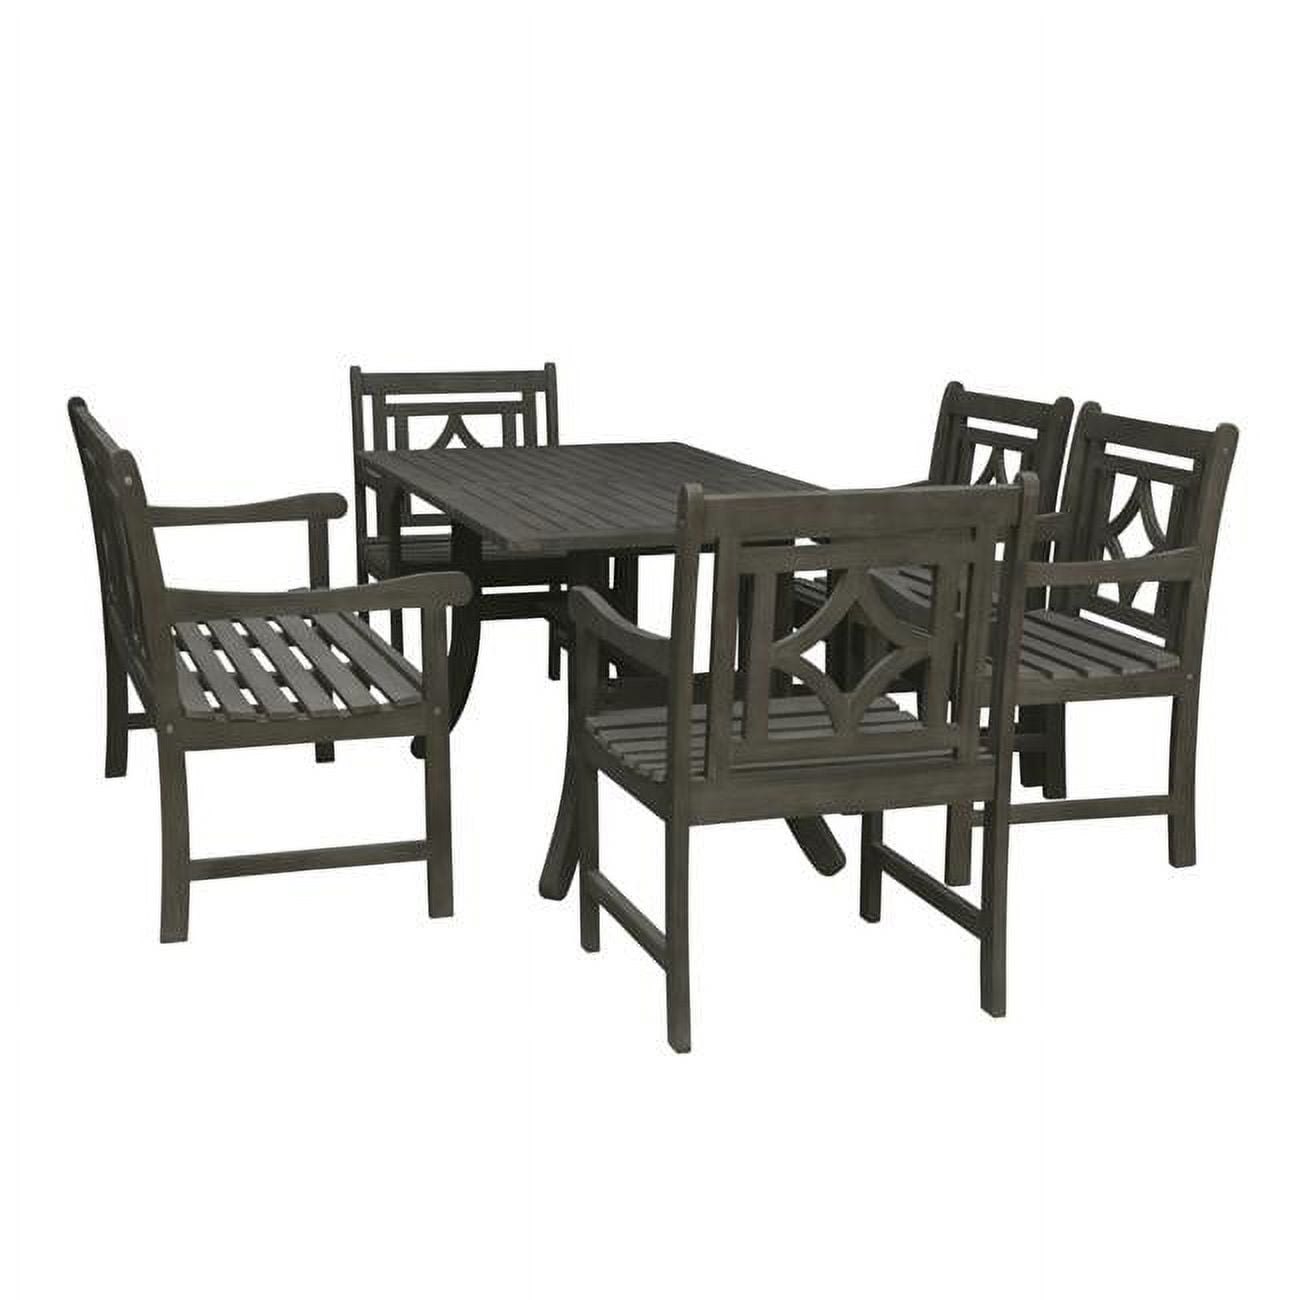 V1300set17 Renaissance Outdoor Wood Patio Curvy Legs Table Dining Set, Vista Grey - 29 X 59 X 31 In. - 6 Piece